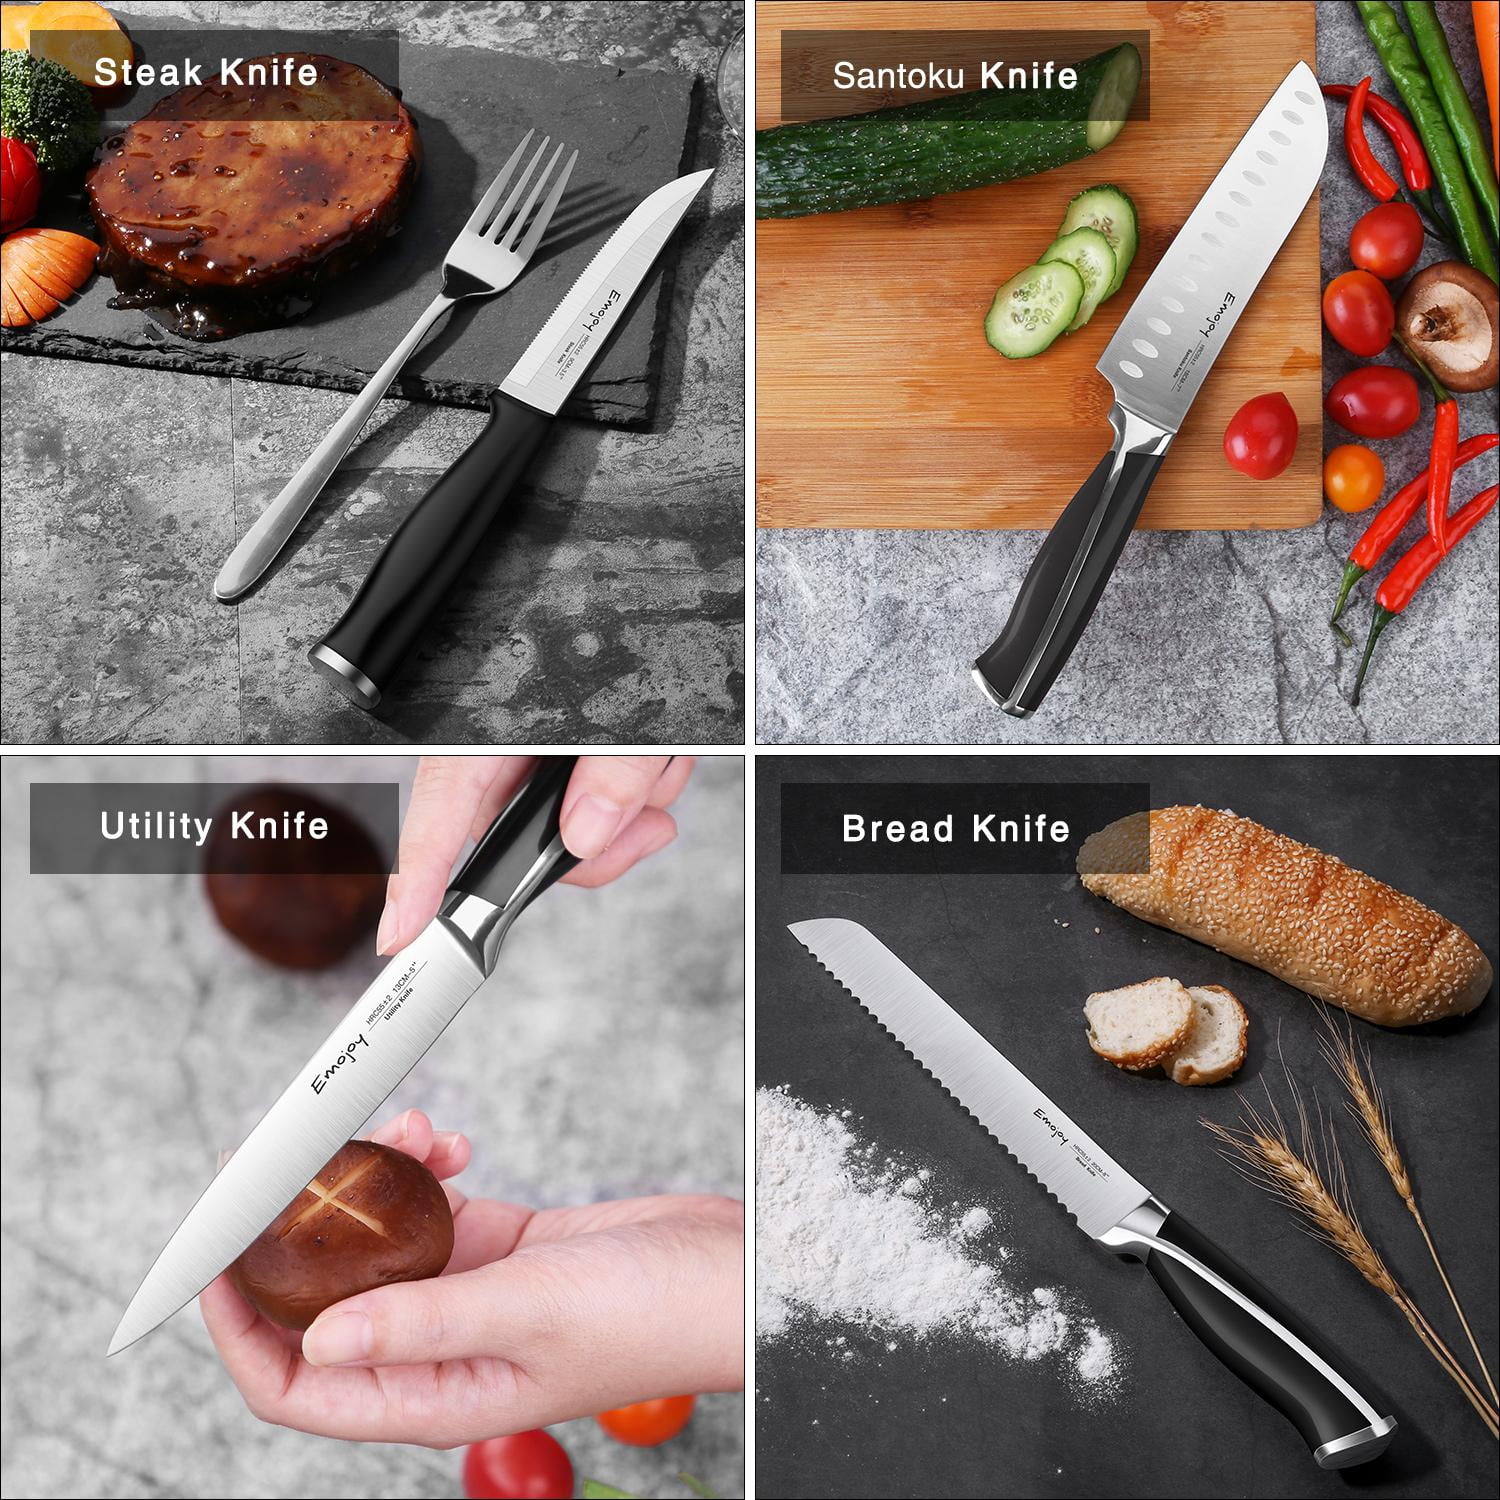 Emojoy KC-KS01 Silver Brown 15 Pieces Knife Set With Wooden Knife